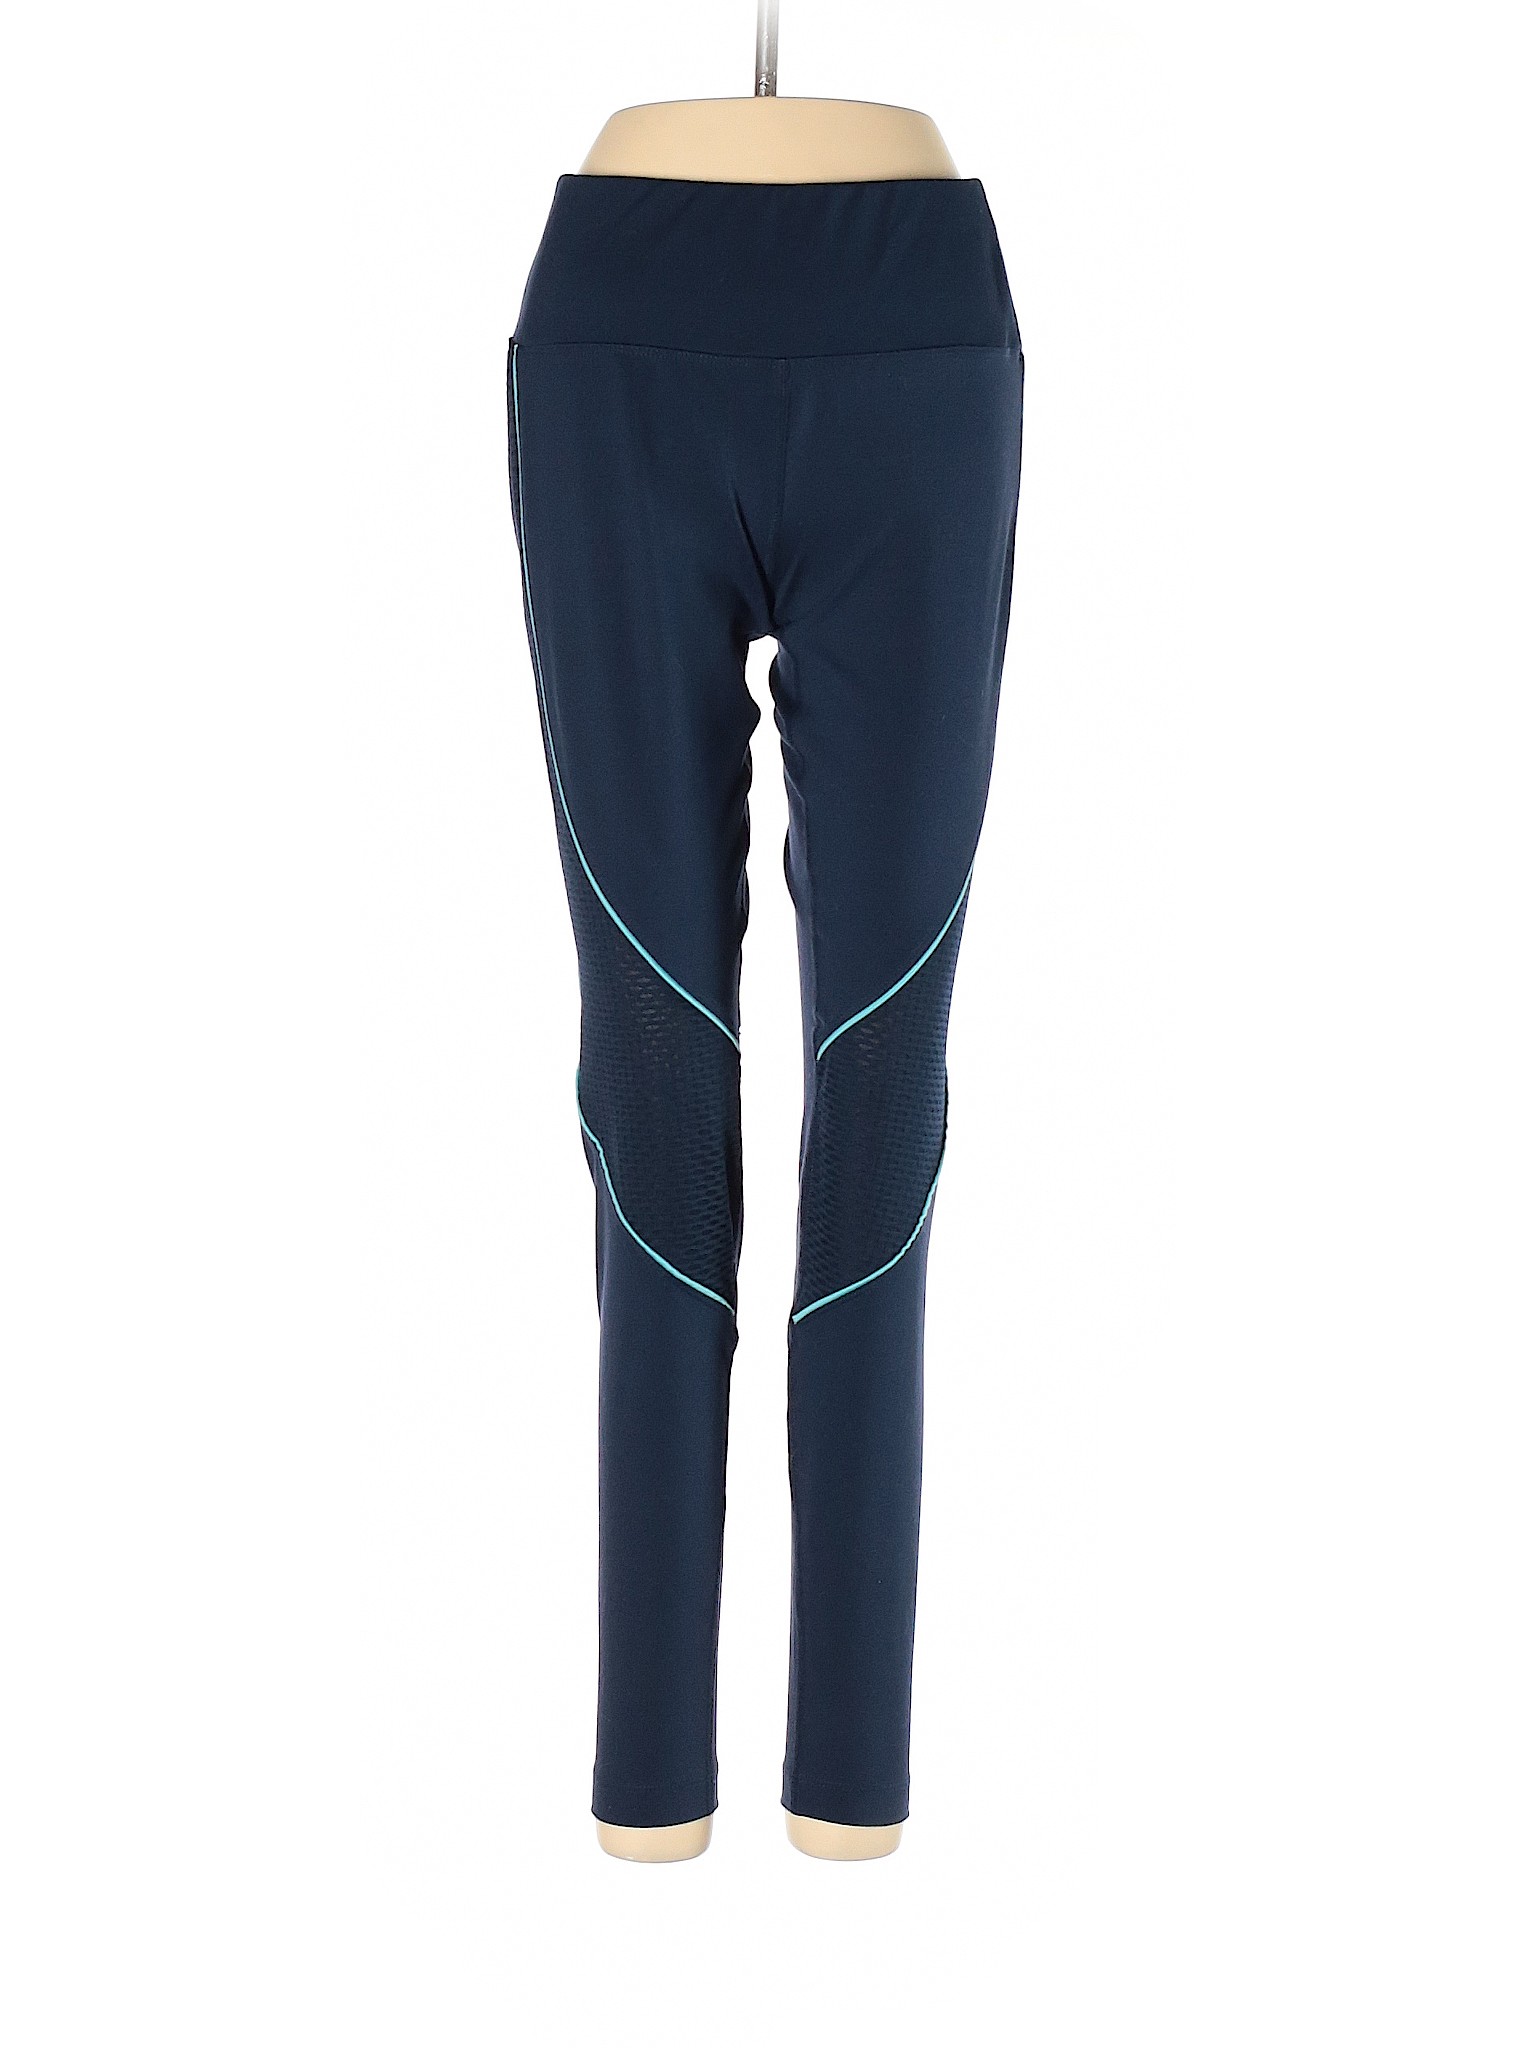 MTA Sport Blue Active Pants Size S - 50% off | thredUP